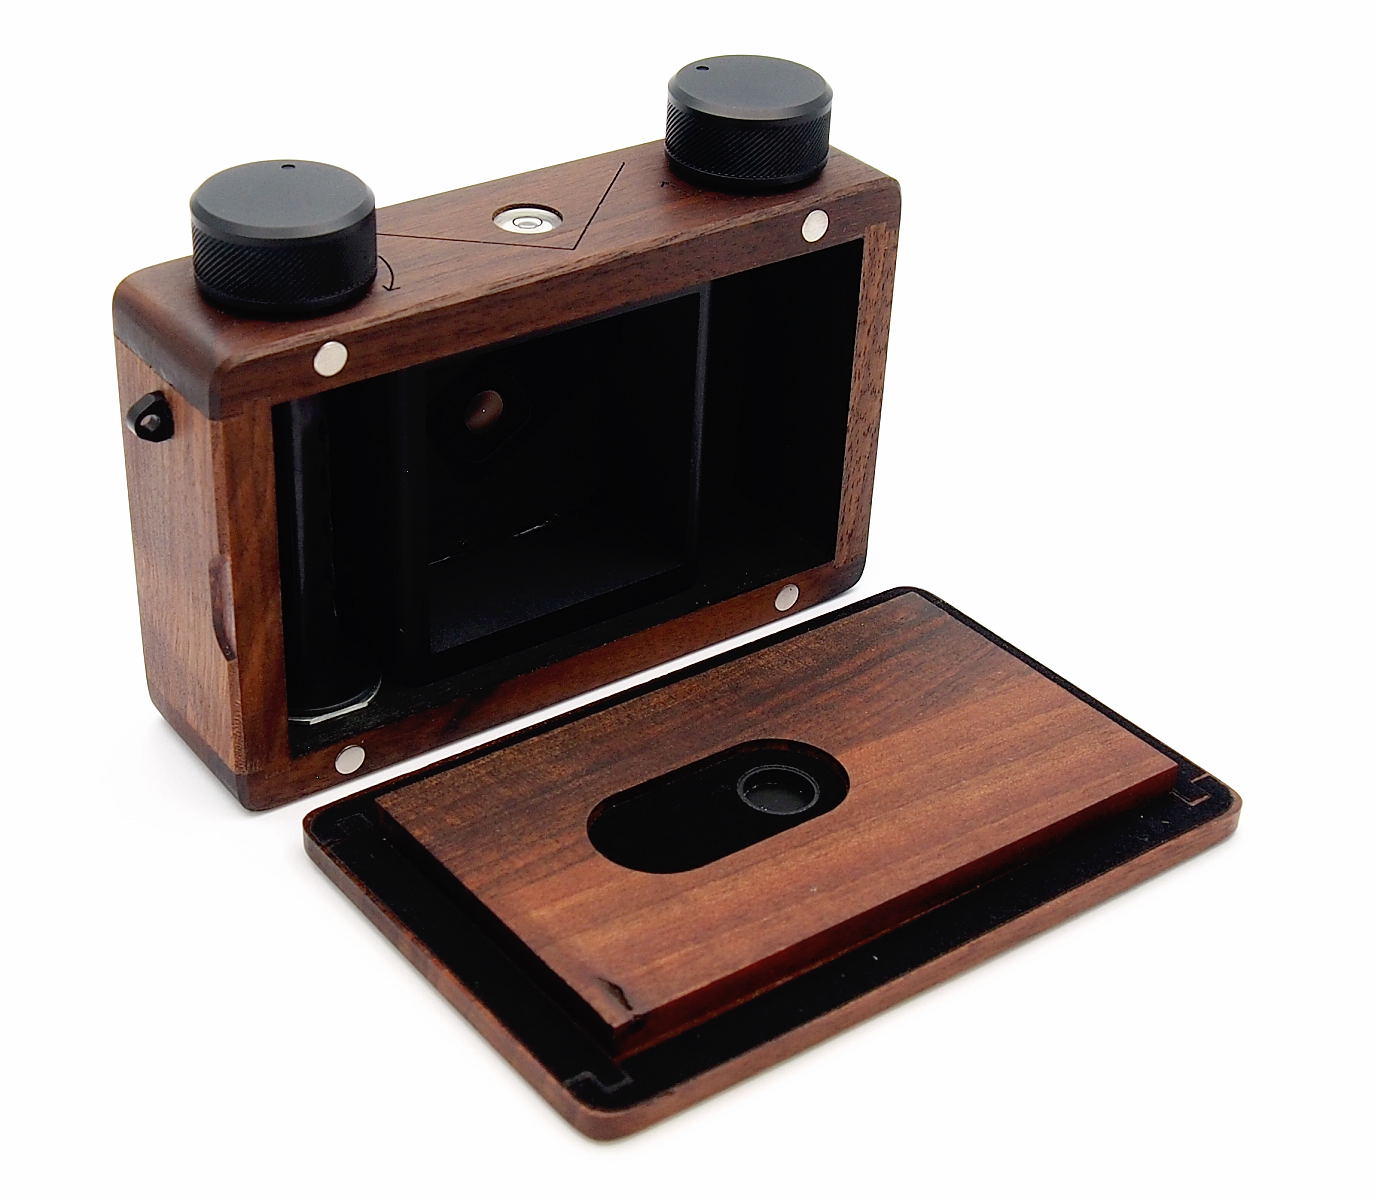 Ondu Pinhole Pocket 6x6cm Camera in Walnut (New) #9446